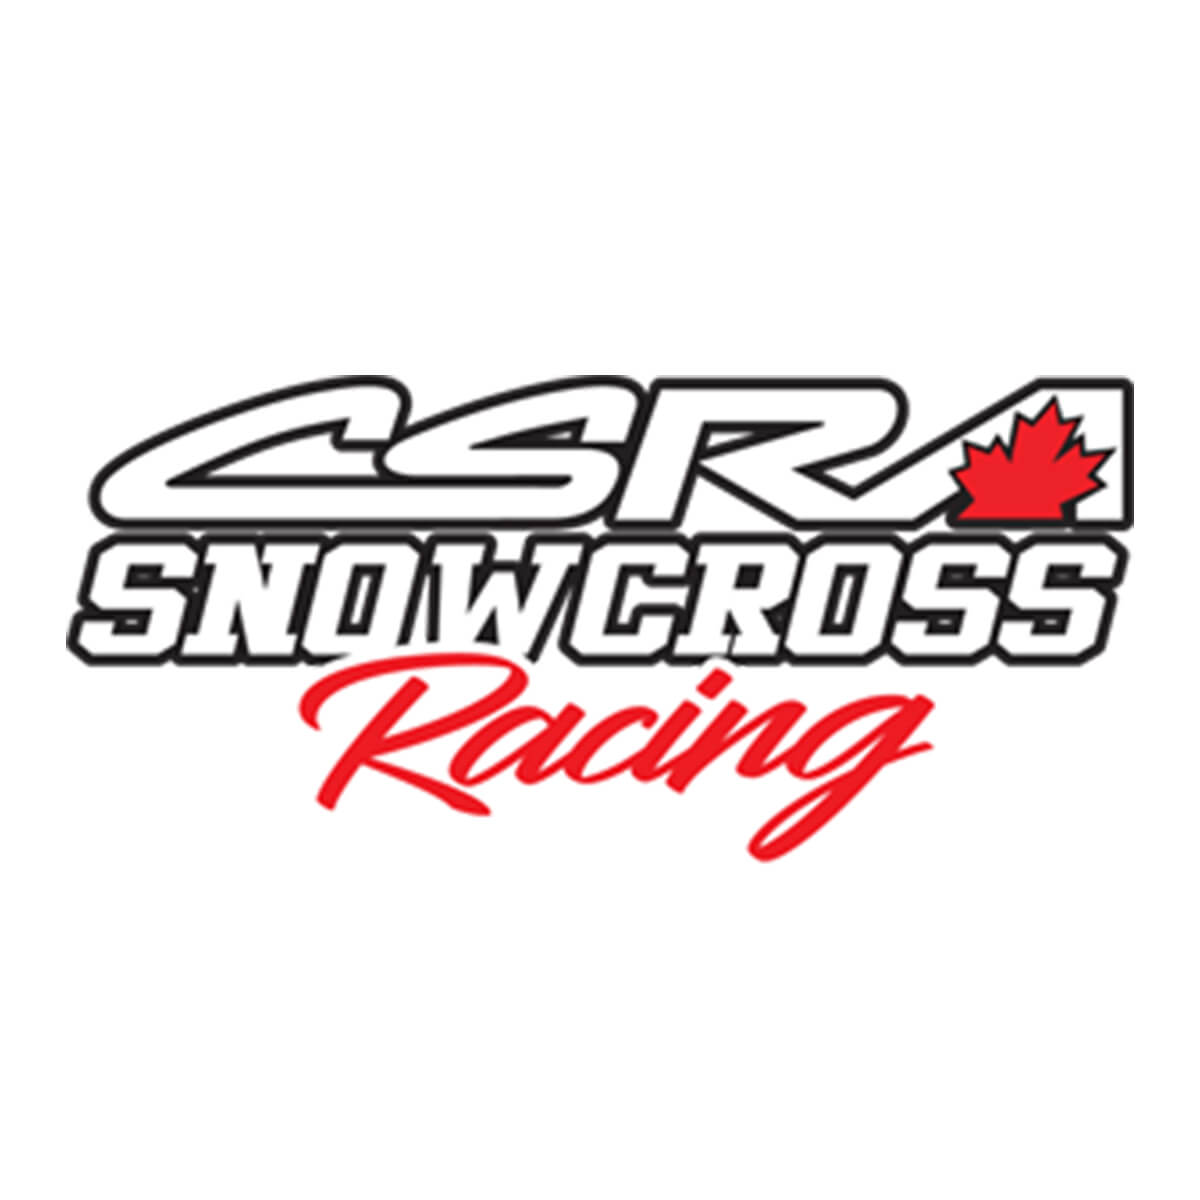 CSRA Snowcross Racing